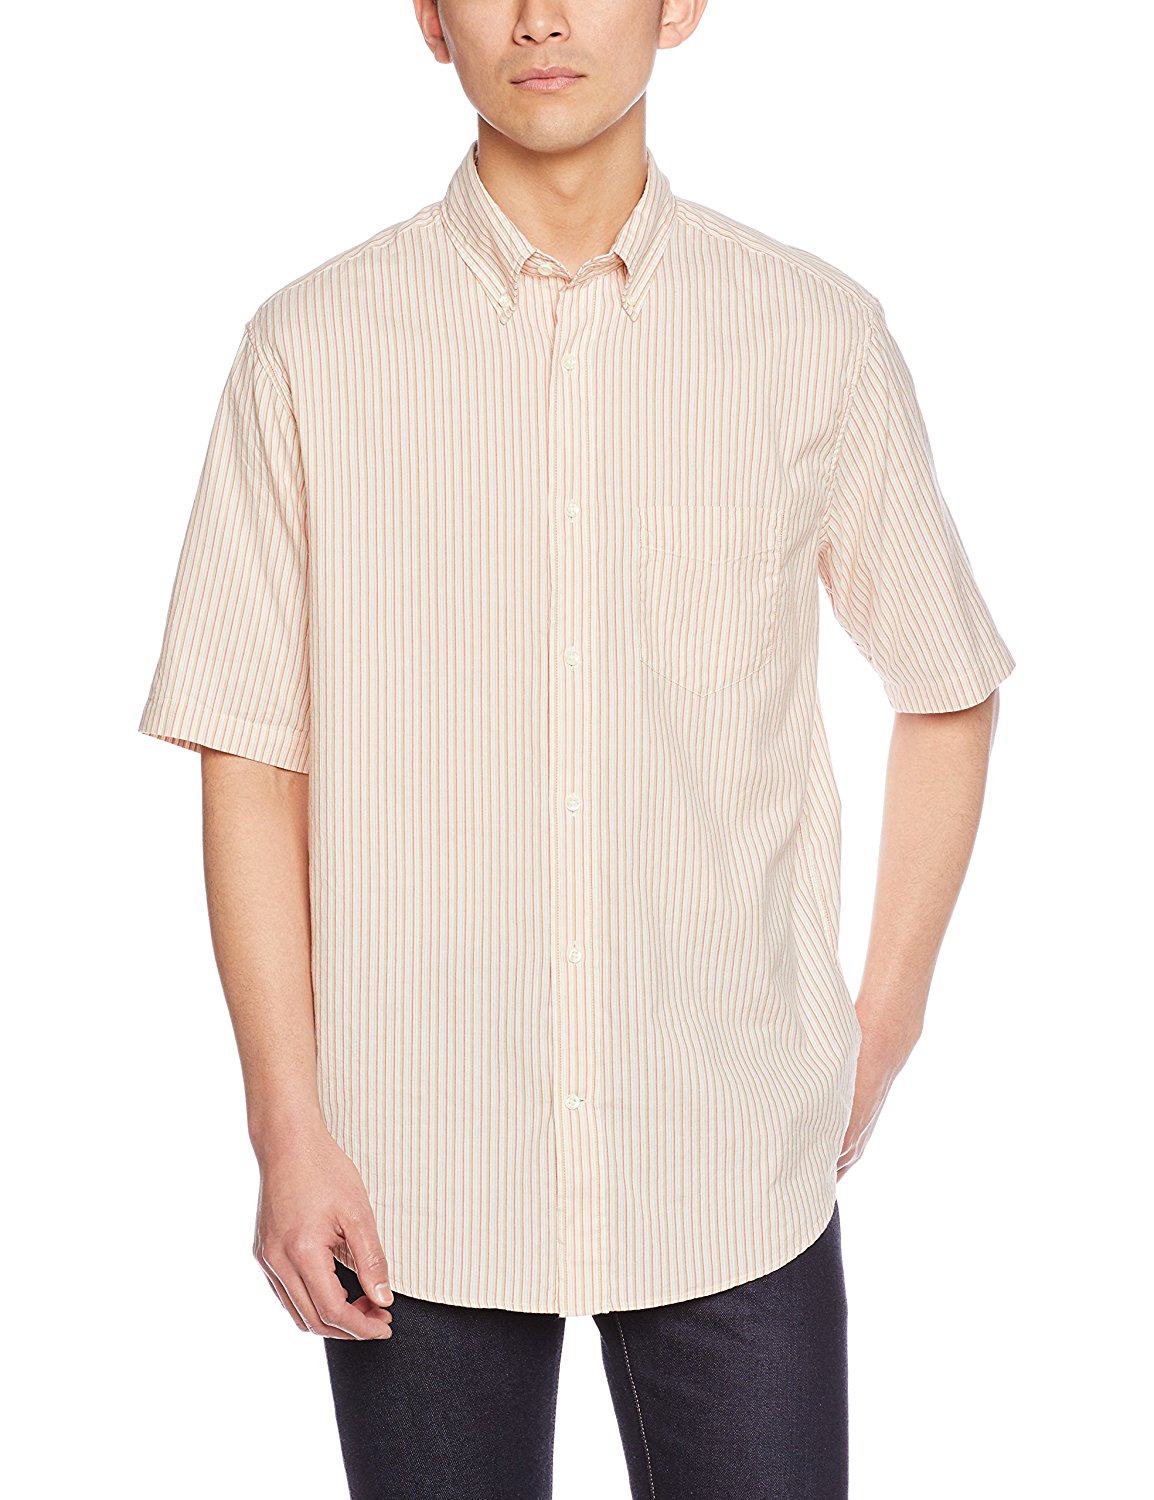 GANT Rugger Men's Cream Micro Stripe Shirt 341158 $135 NWT